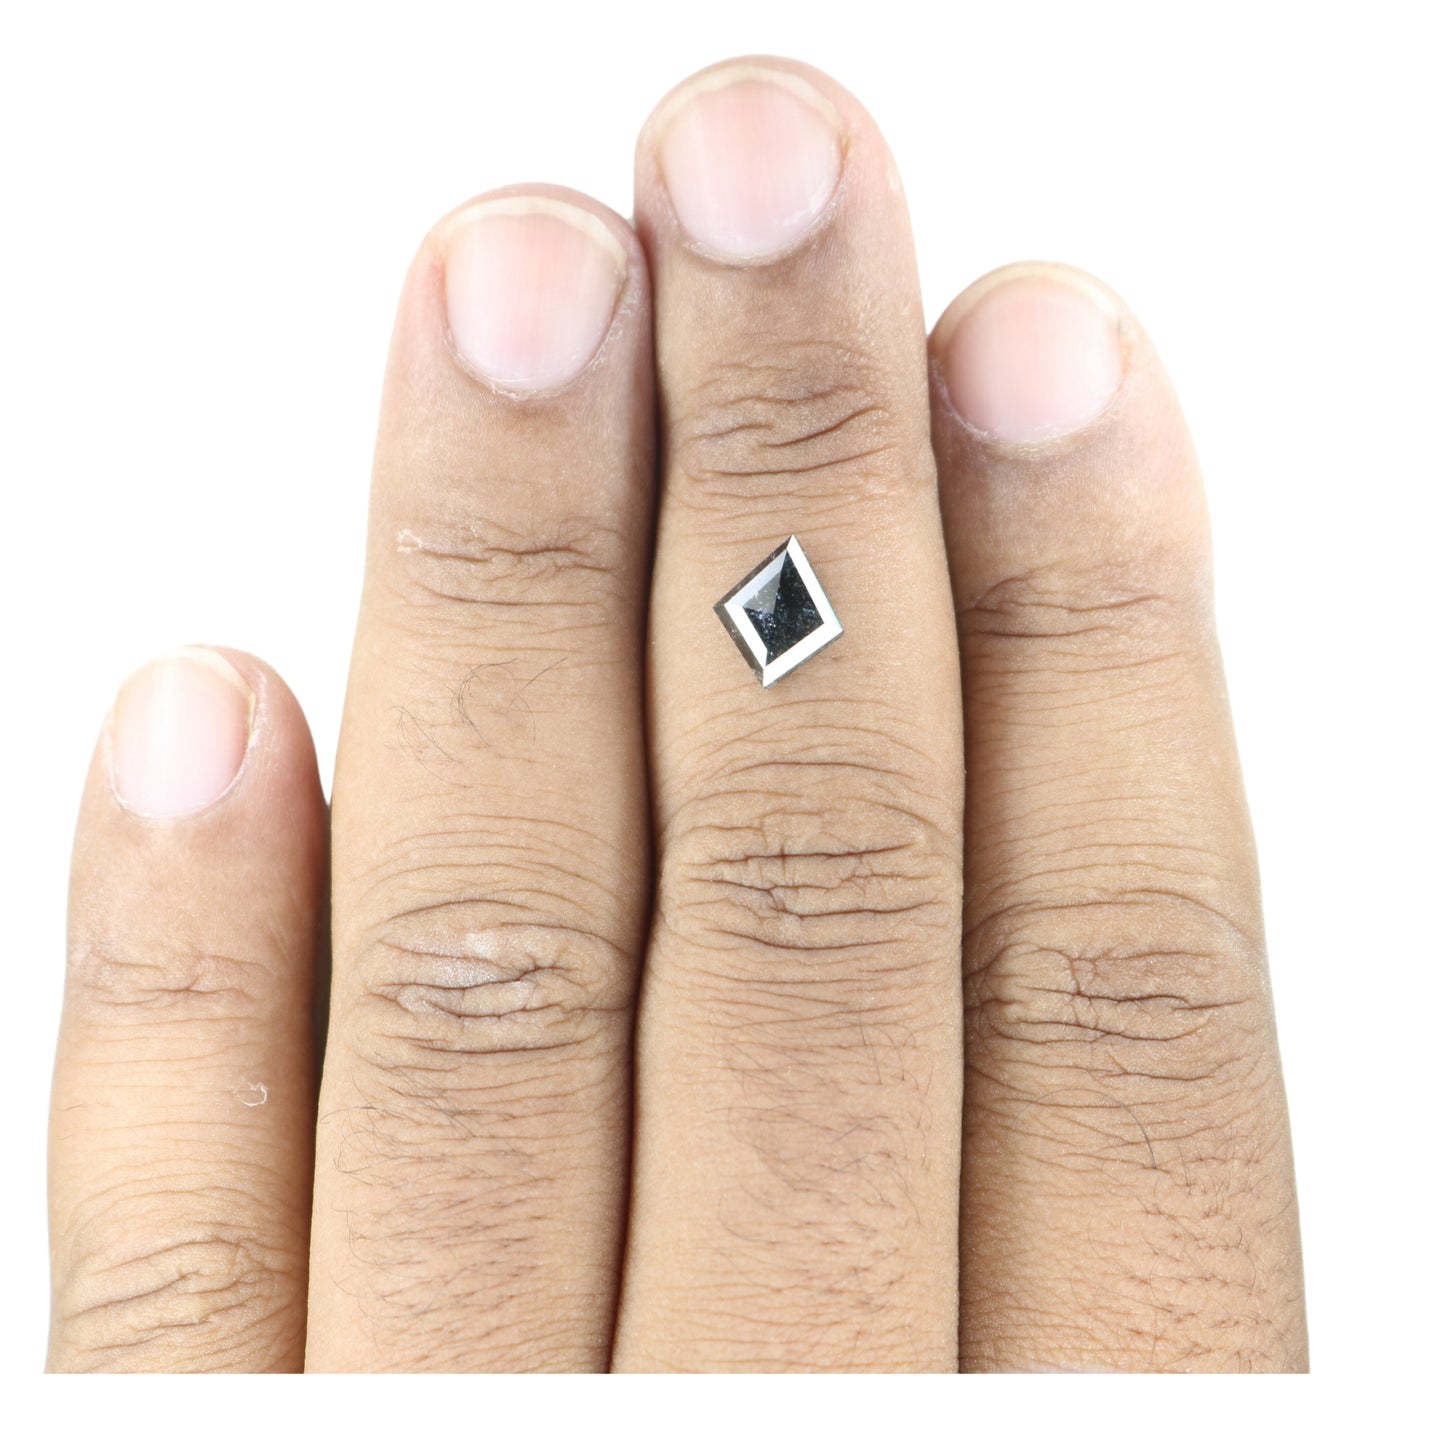 1.35 CT Kite Shape Salt And Pepper Rustic Diamond For Statement Jewelry | Diamond Ring